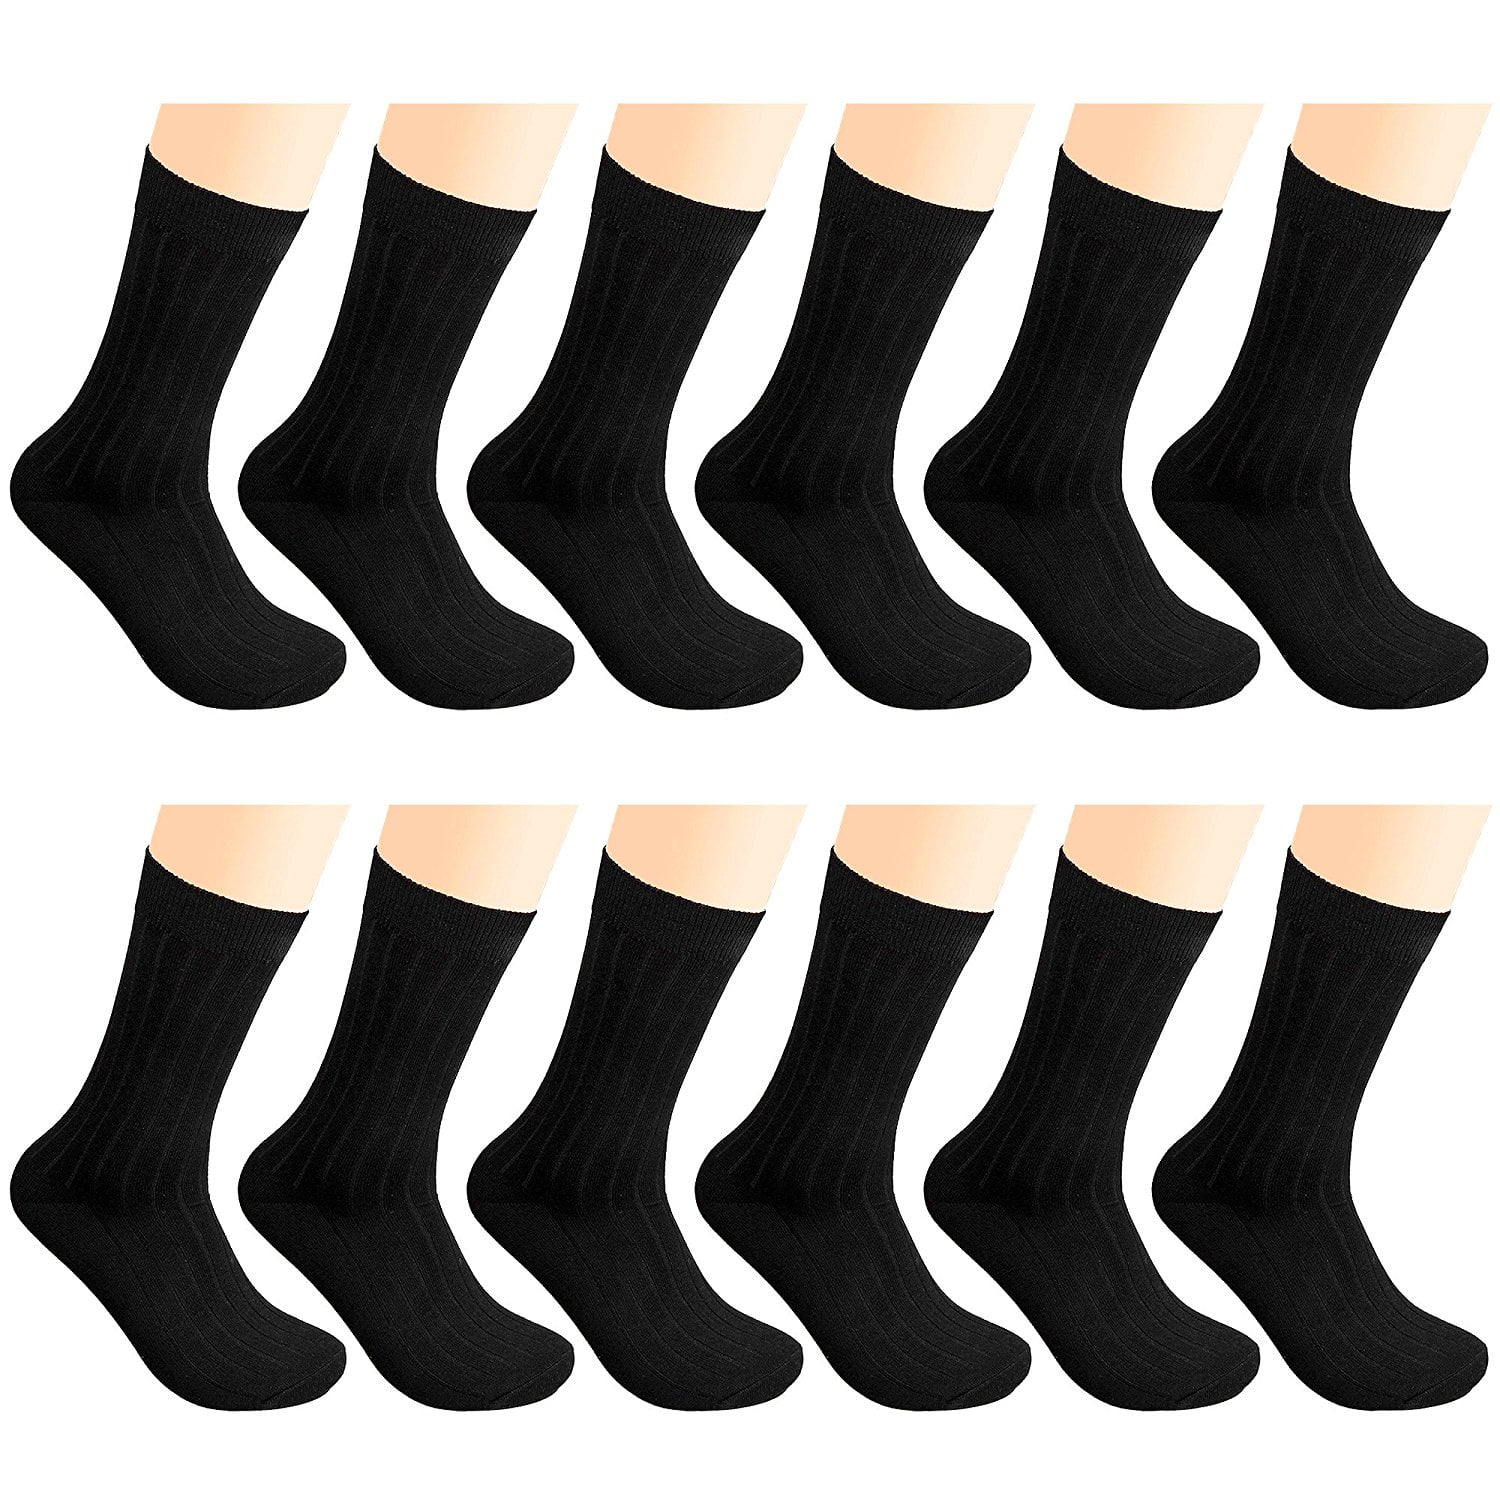 Mens Sport Cotton Socks Lot Crew Ankle Low Cut No Show Casual Dress Socks 7-12 